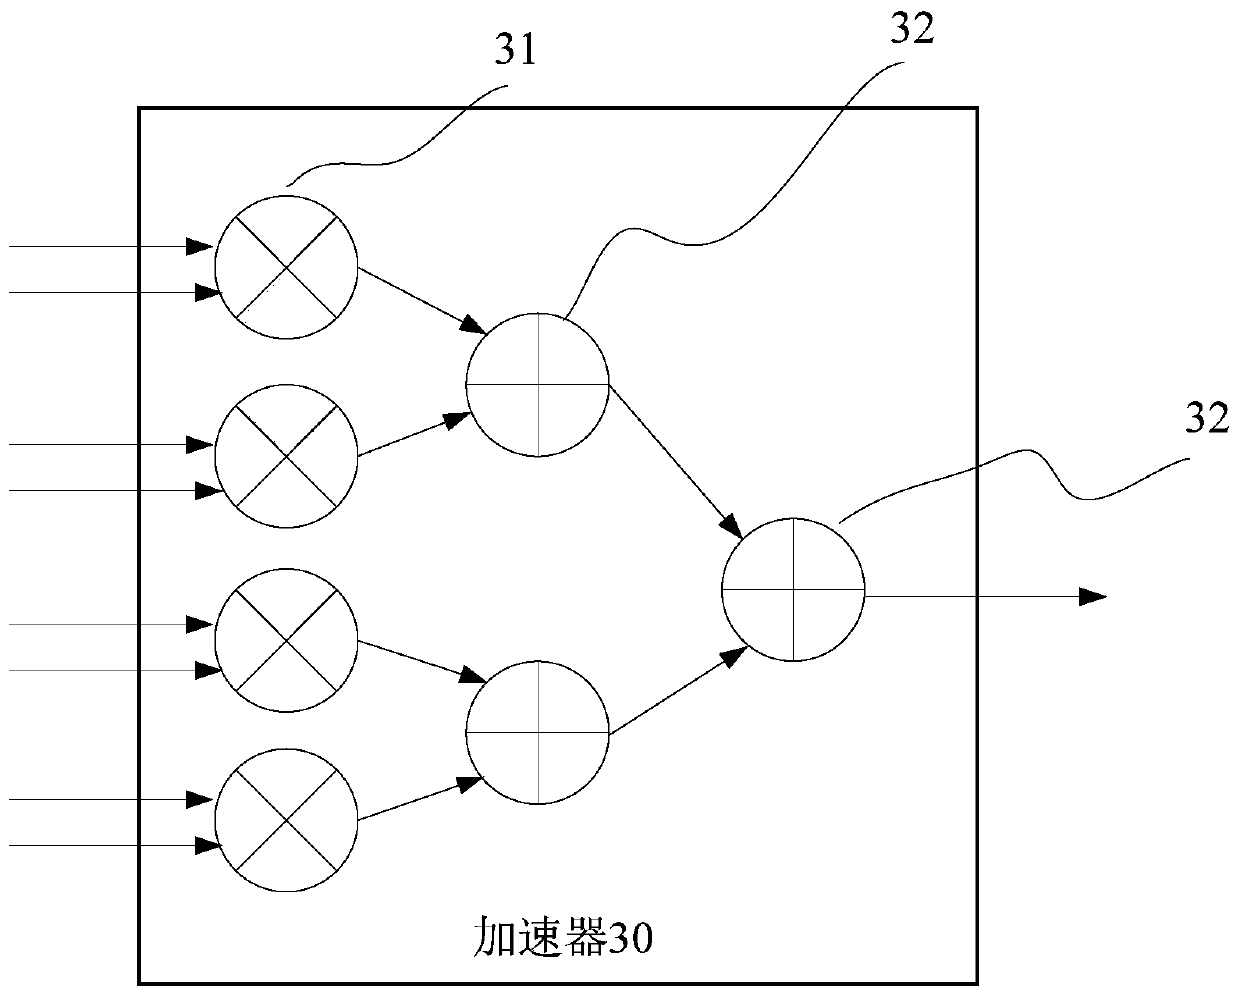 Edge artificial intelligence computing system framework based on SoC FPGA